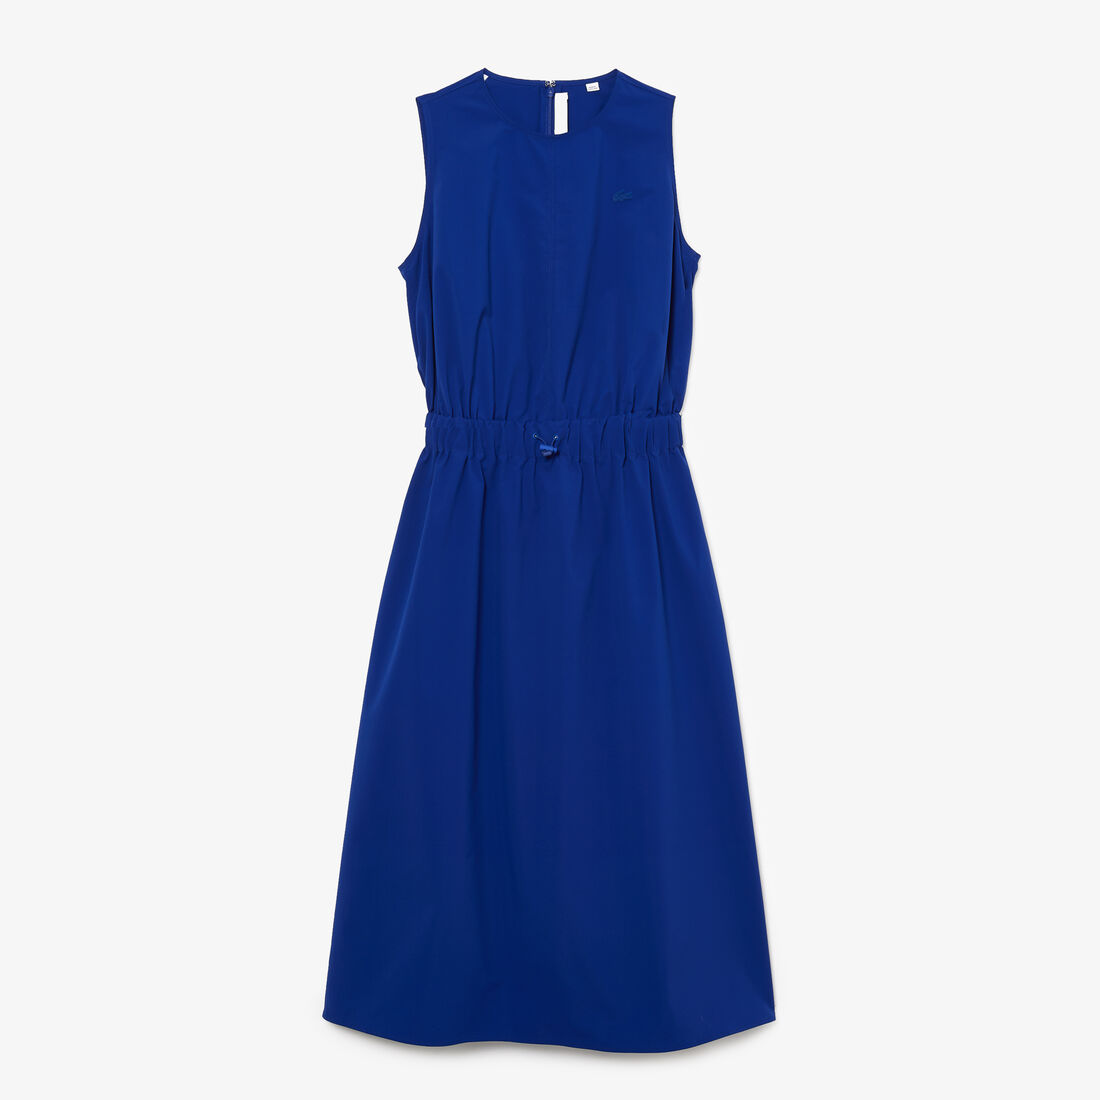 Lacoste Elasticised Taille Open Back Tank Top Kleider Damen Blau | CYOW-87350